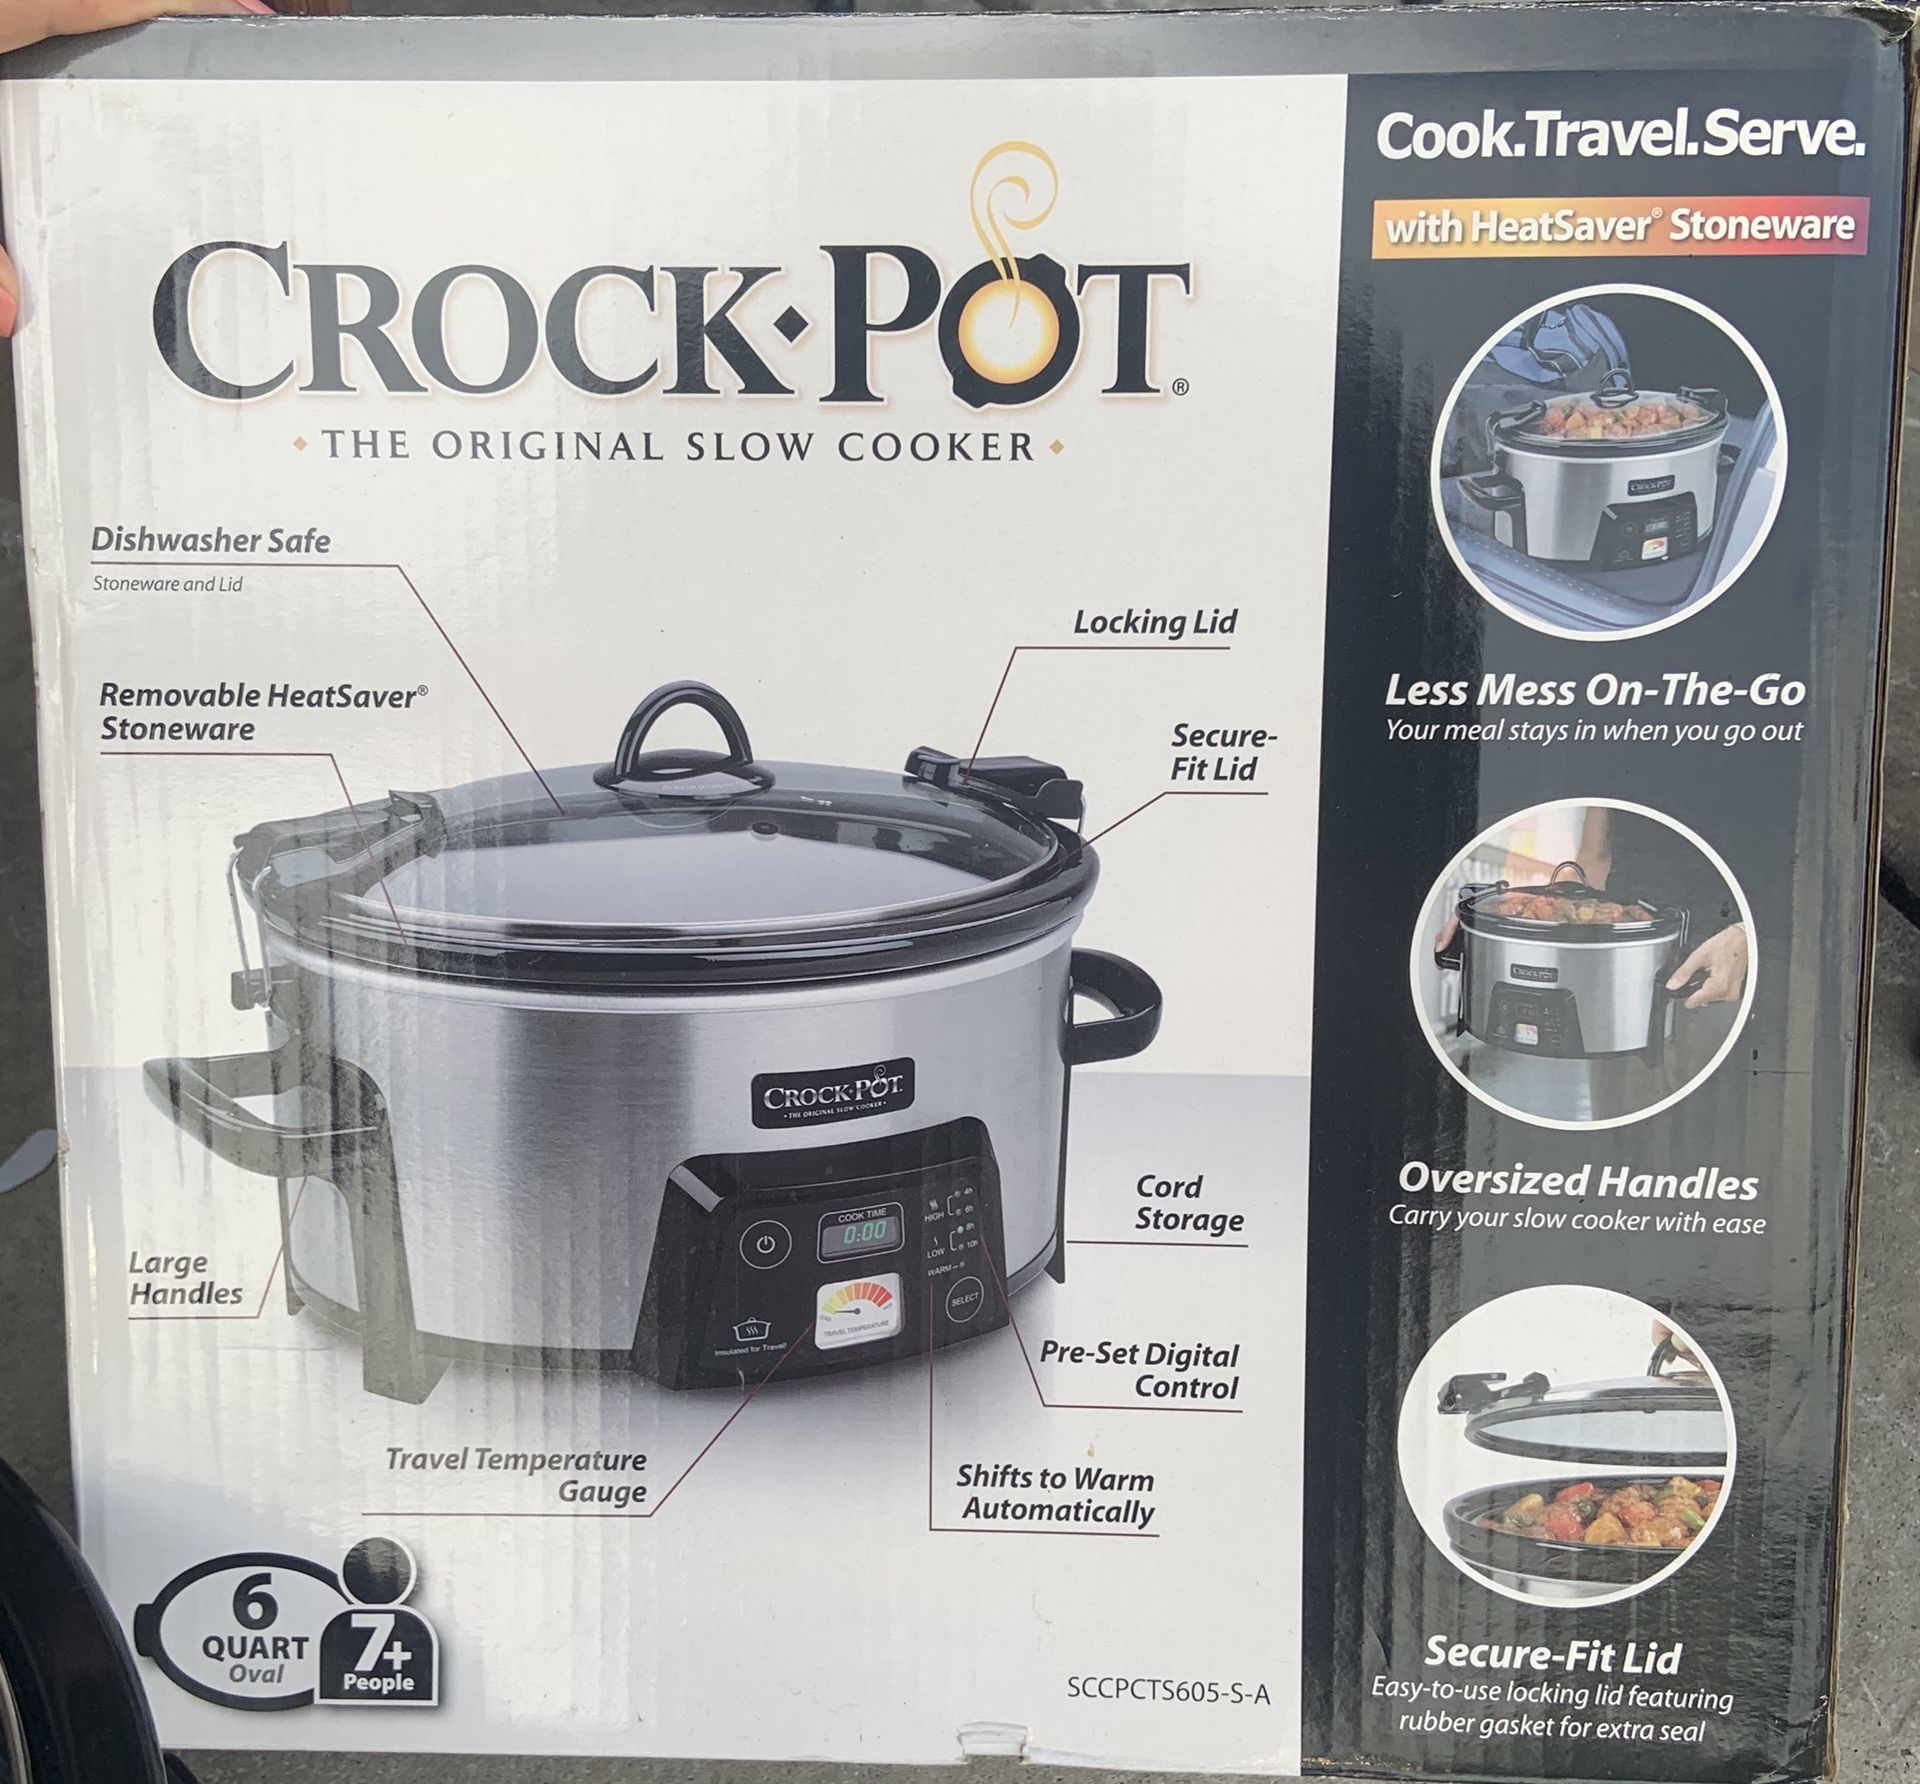 Crock Pot (the original slow cooker)